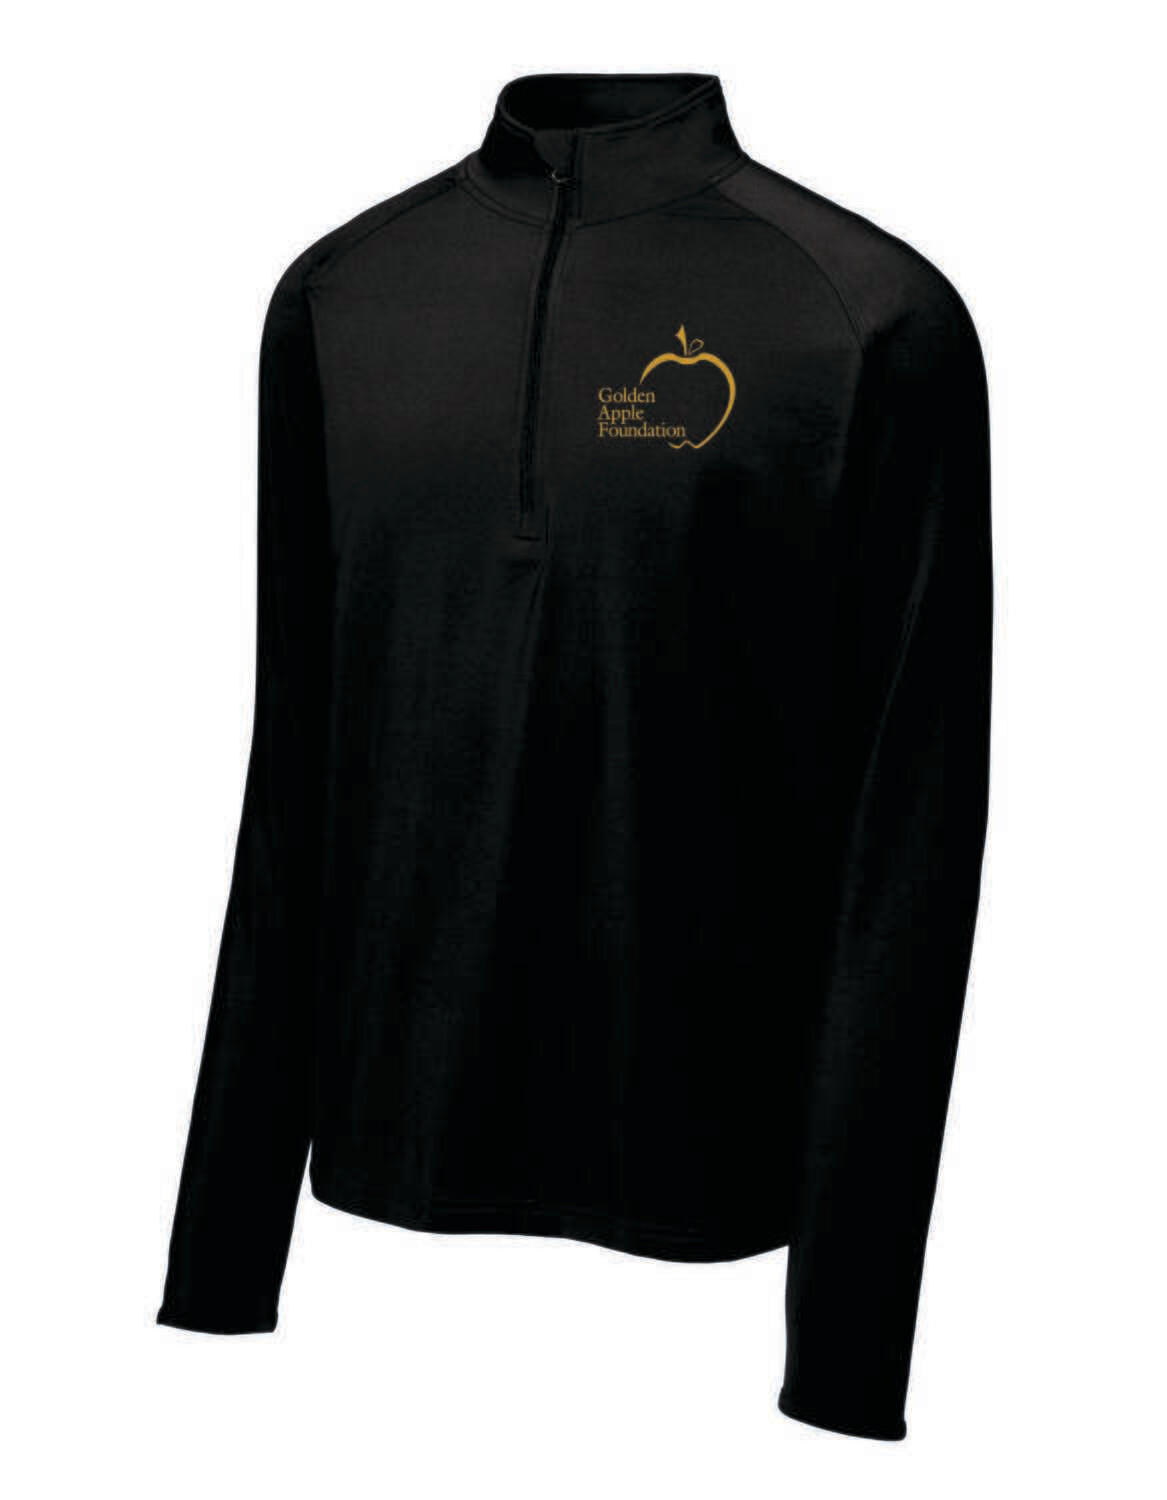 Golden Apple Foundation 1/4-Zip Pullover, Black